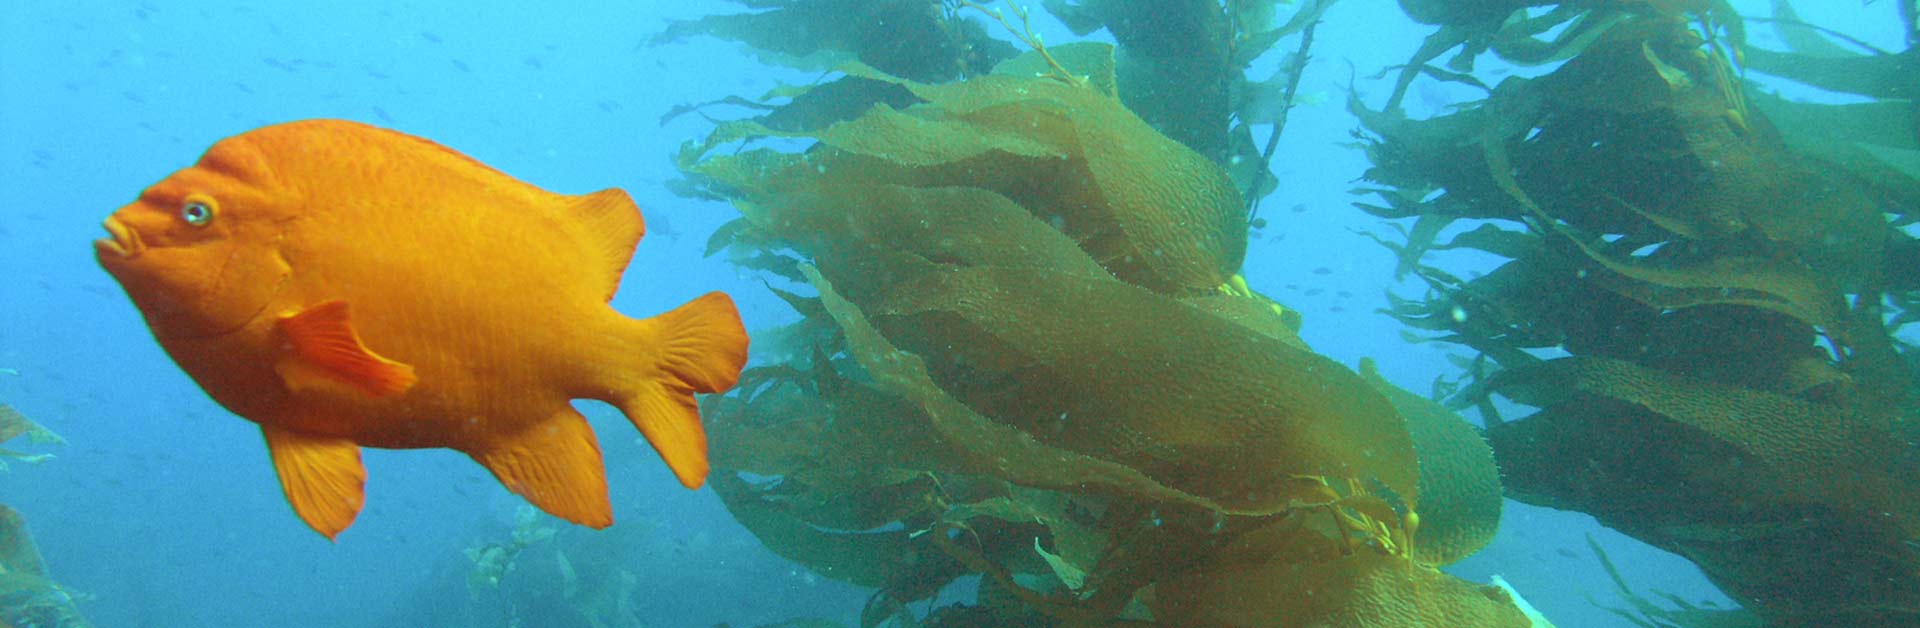 A garibaldi fish underwater.